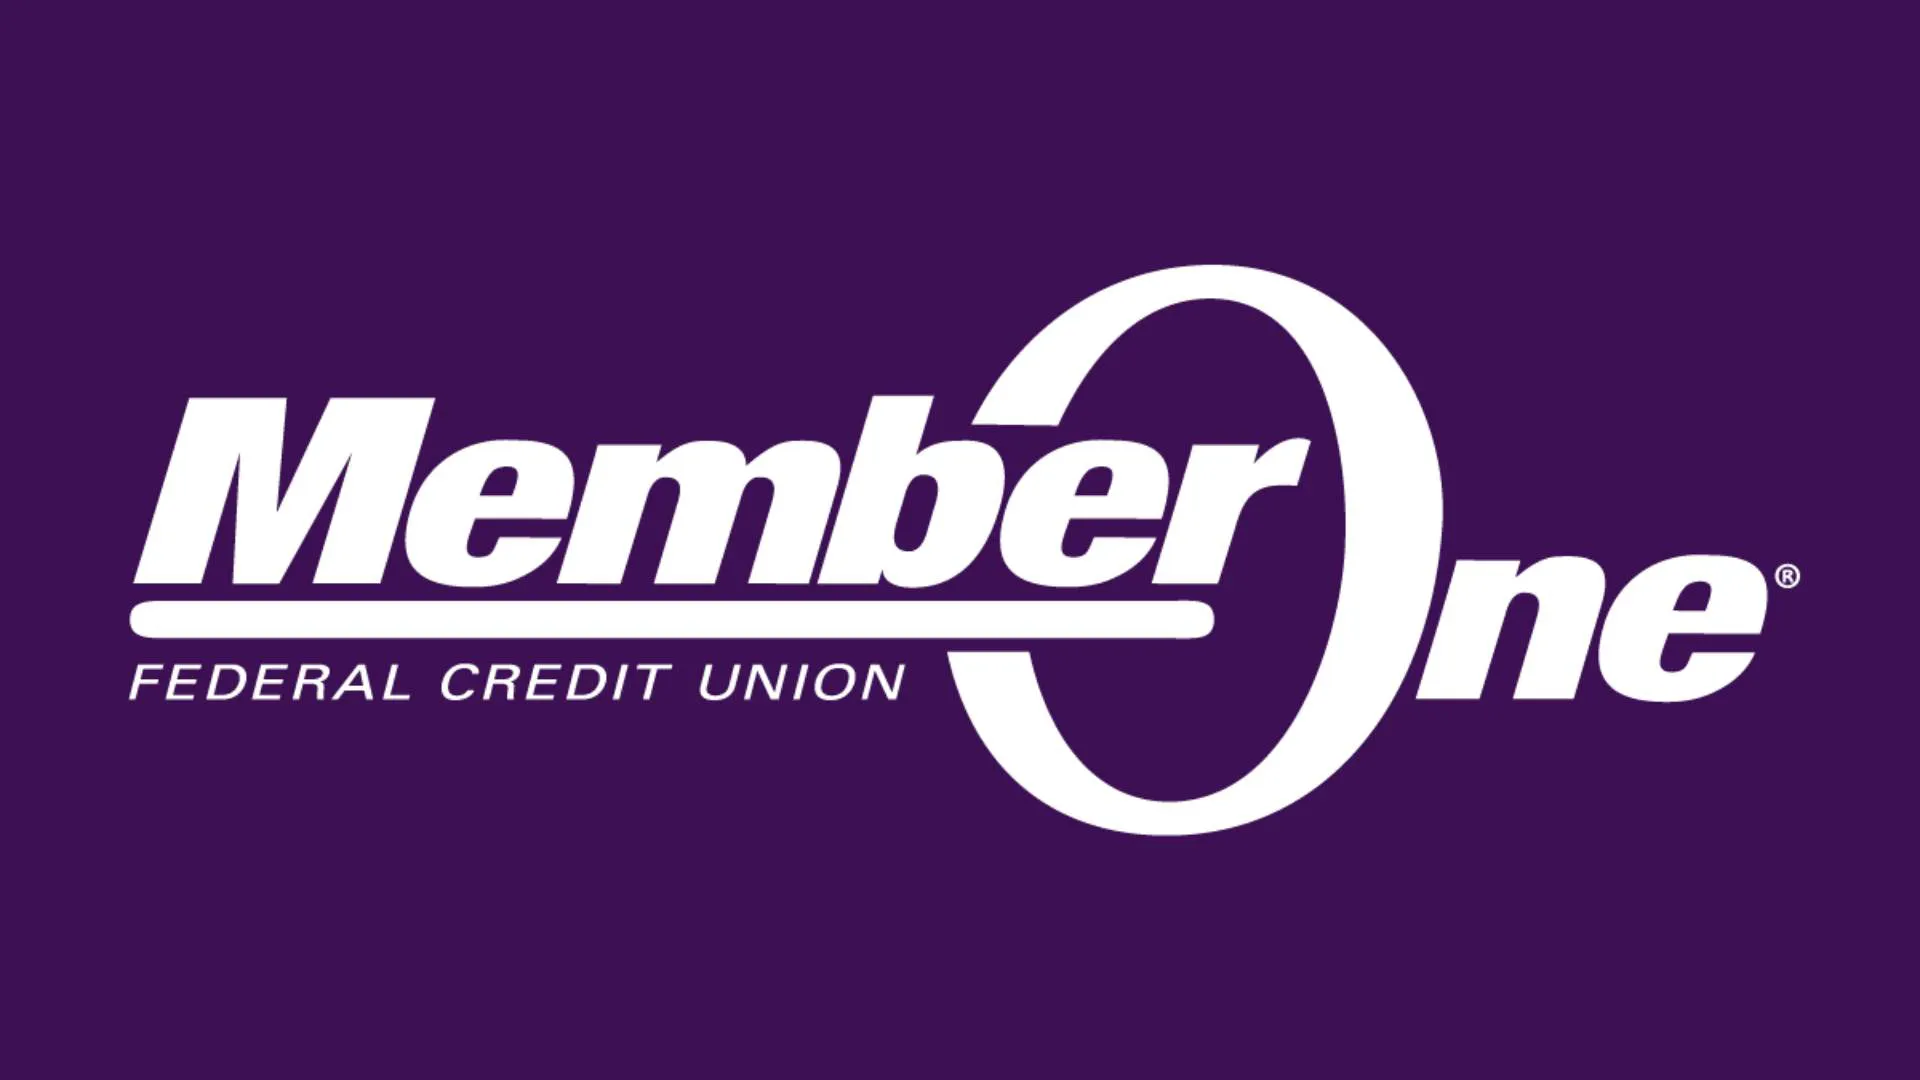 Member One White Logo Dark Purple Background 16x9